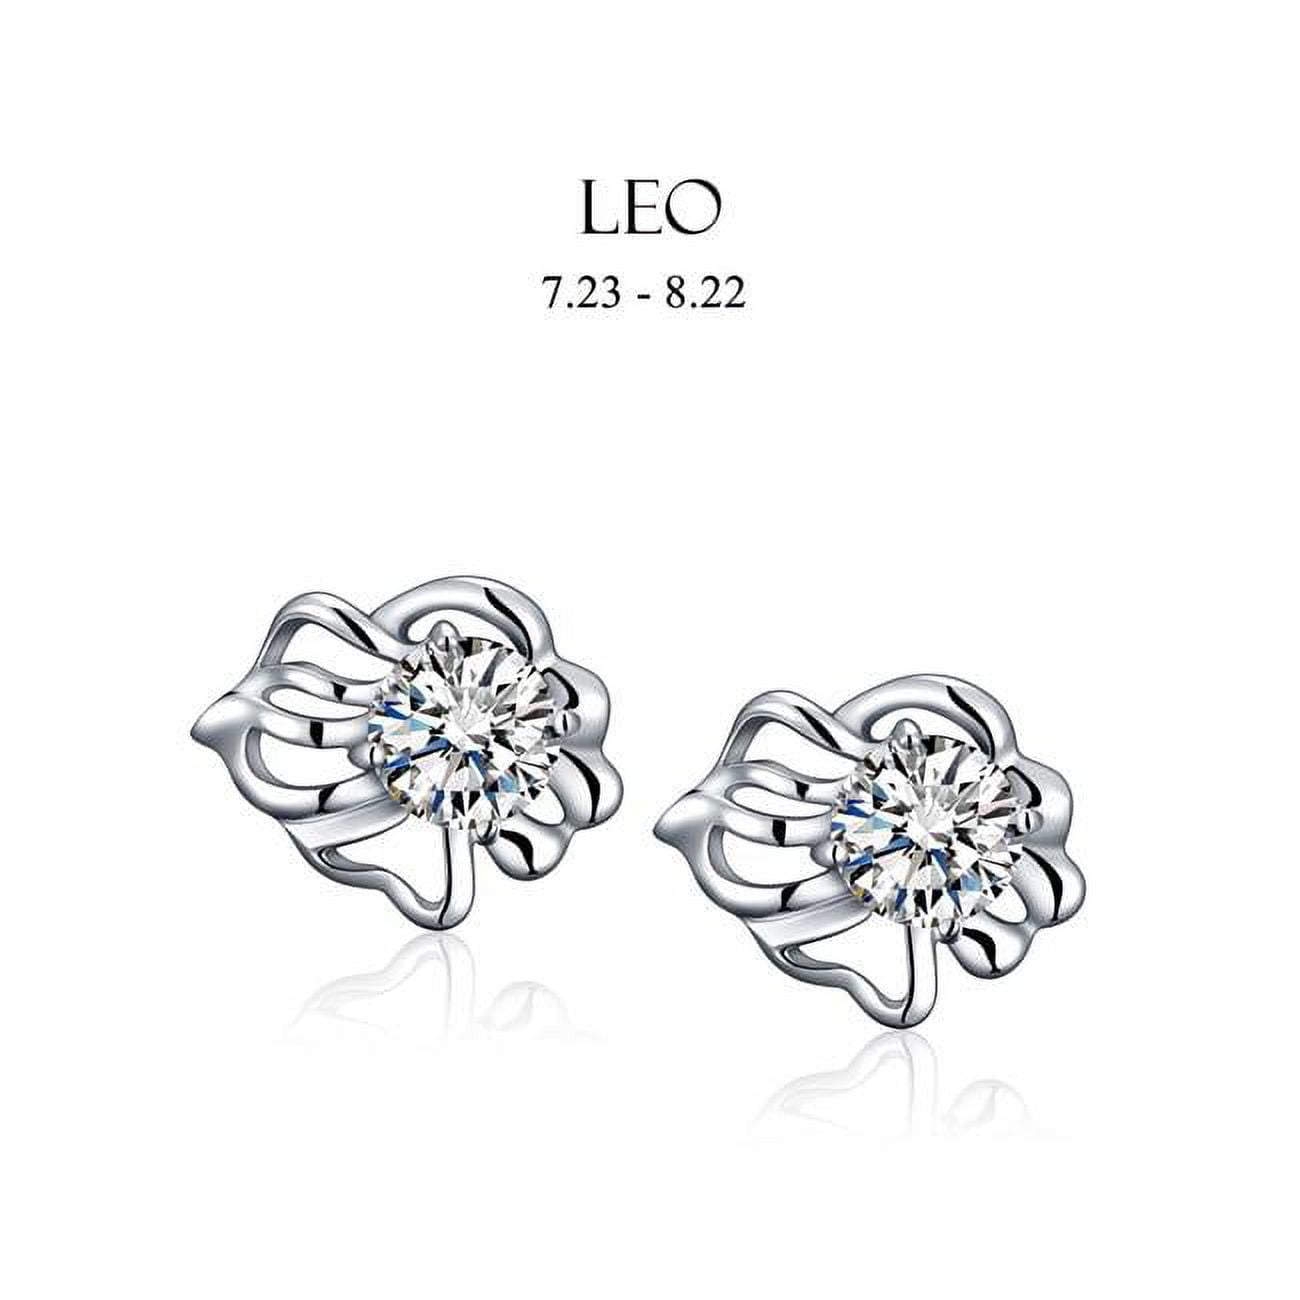 Picture of Amabel Designs E-I2CZLEO-RDM Rhodium Cubic Zirconia Leo Stud Earrings